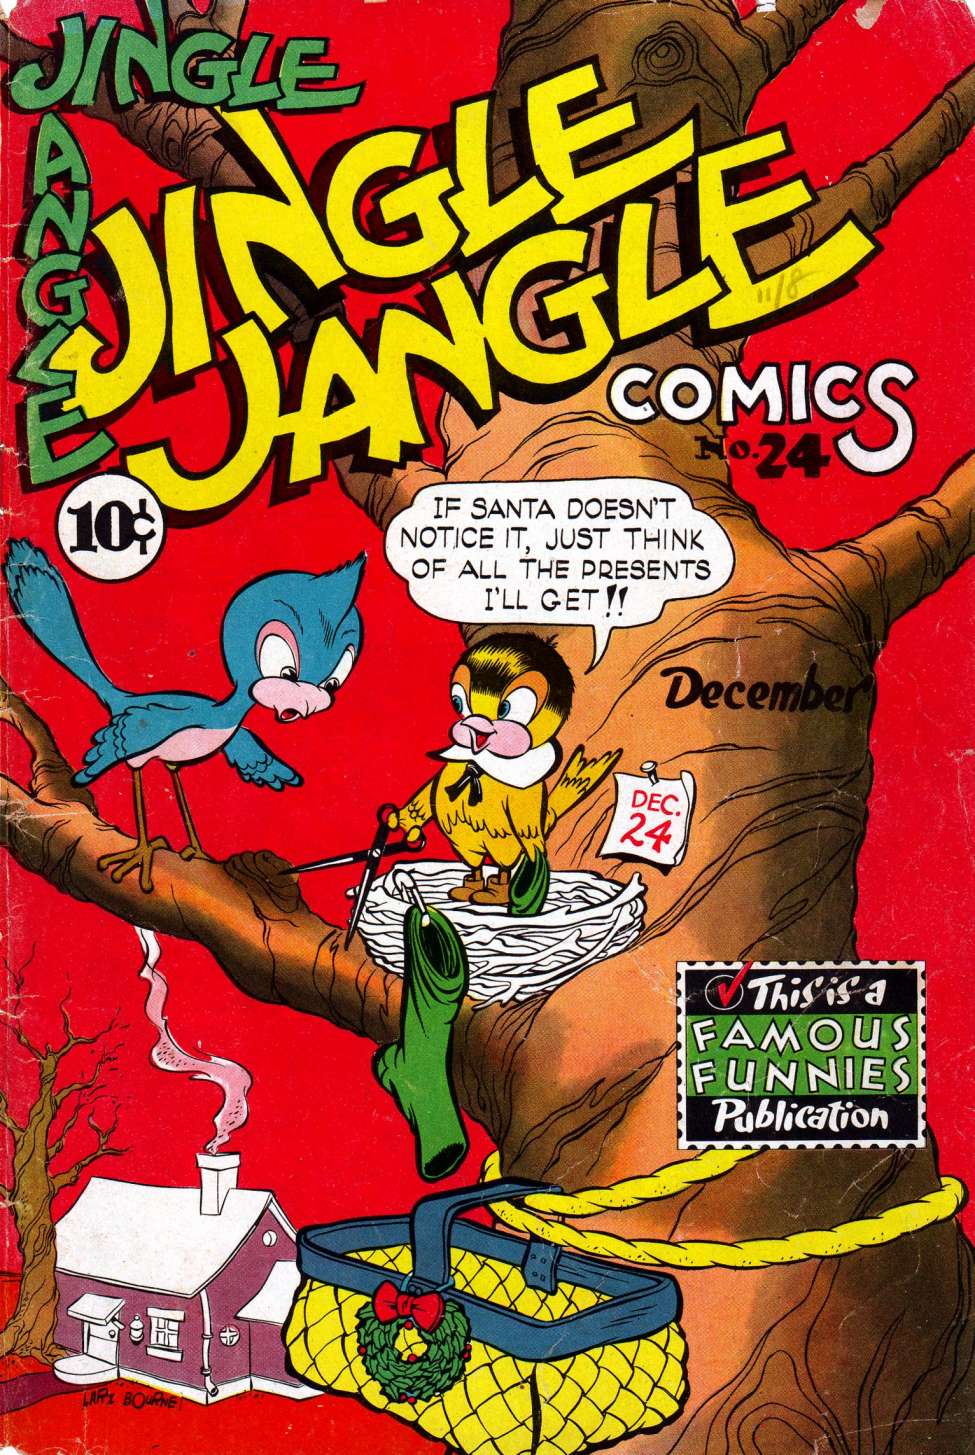 Book Cover For Jingle Jangle Comics 24